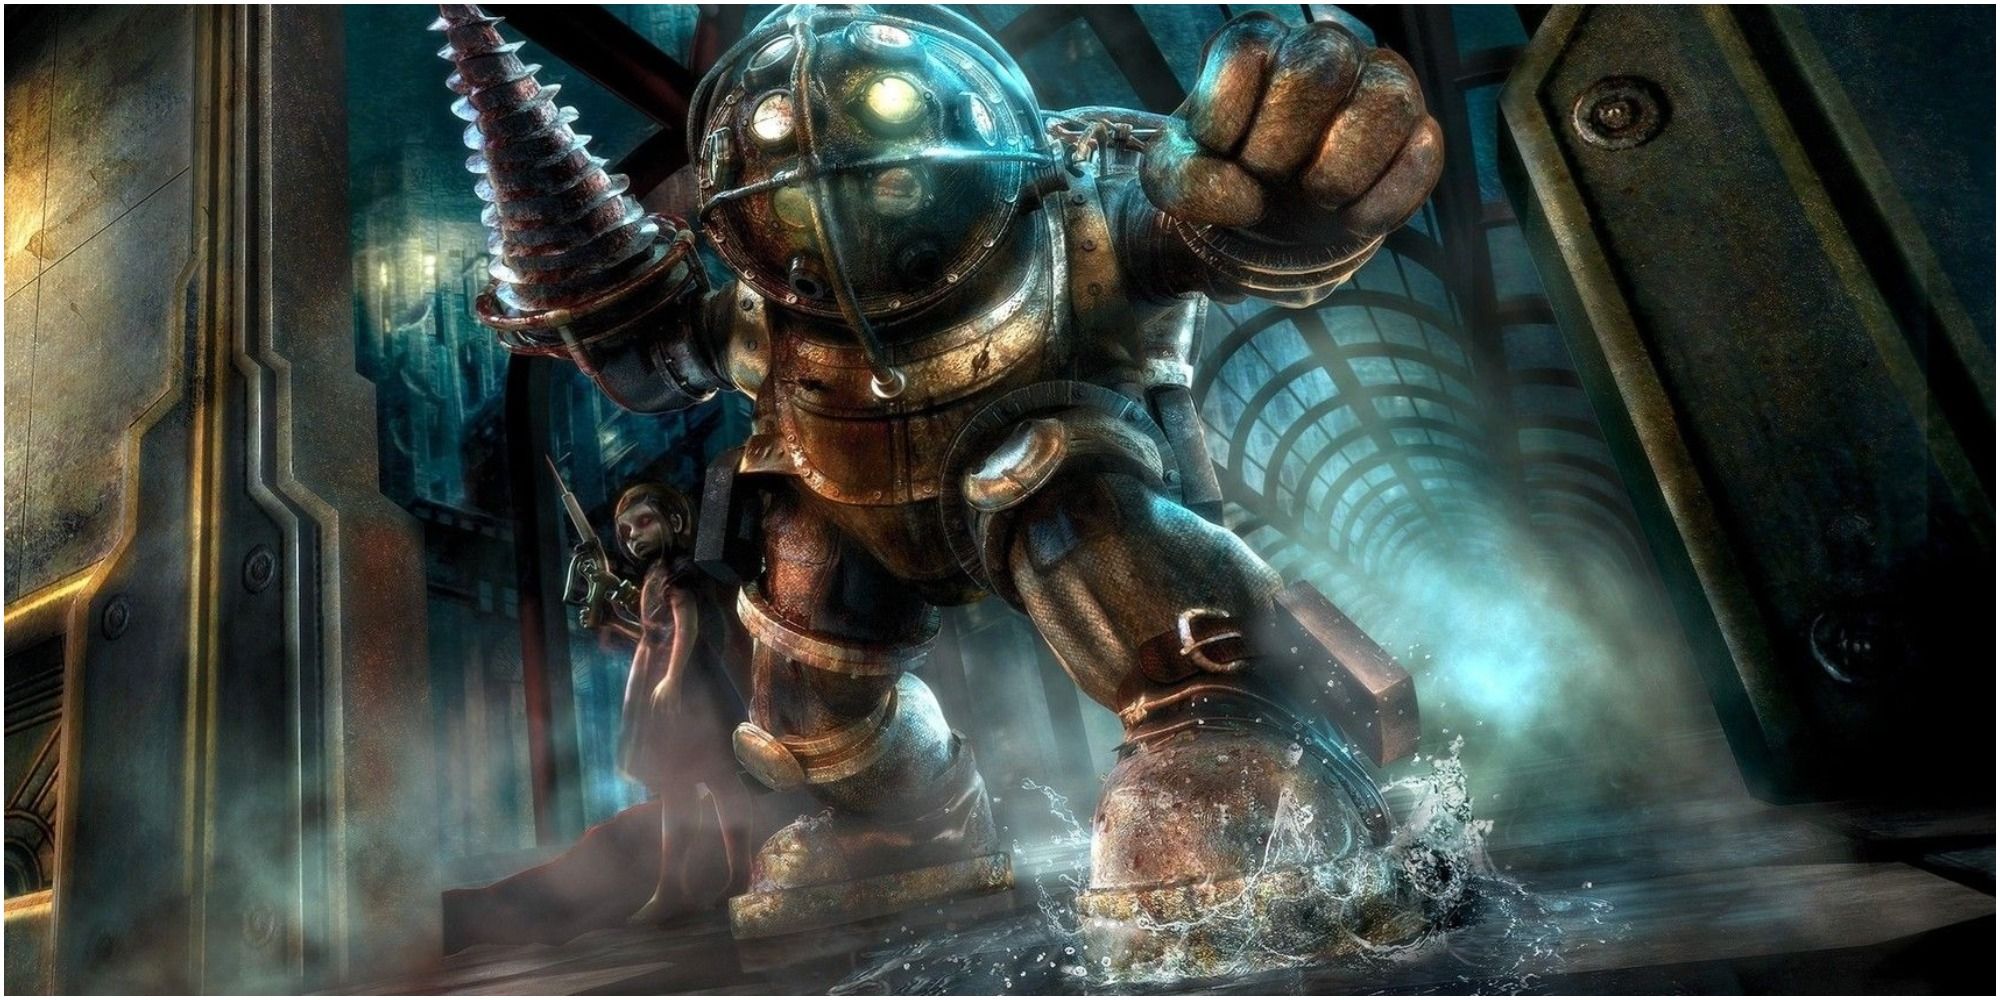 BioShock Promotional Artwork With Strange Figures